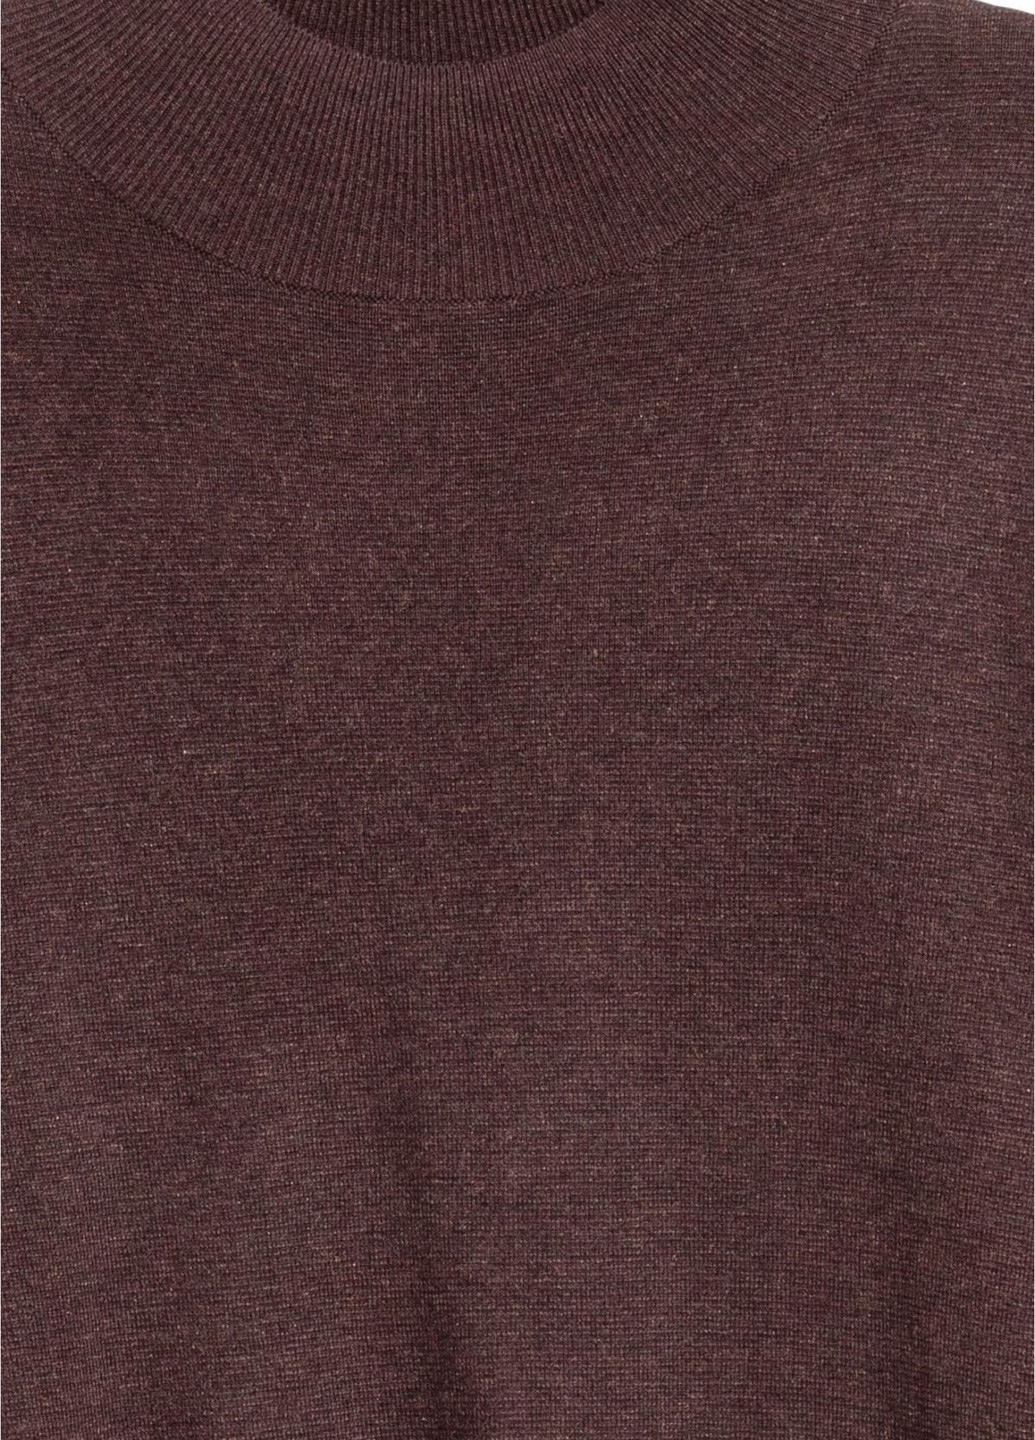 Темно-коричневый свитер H&M